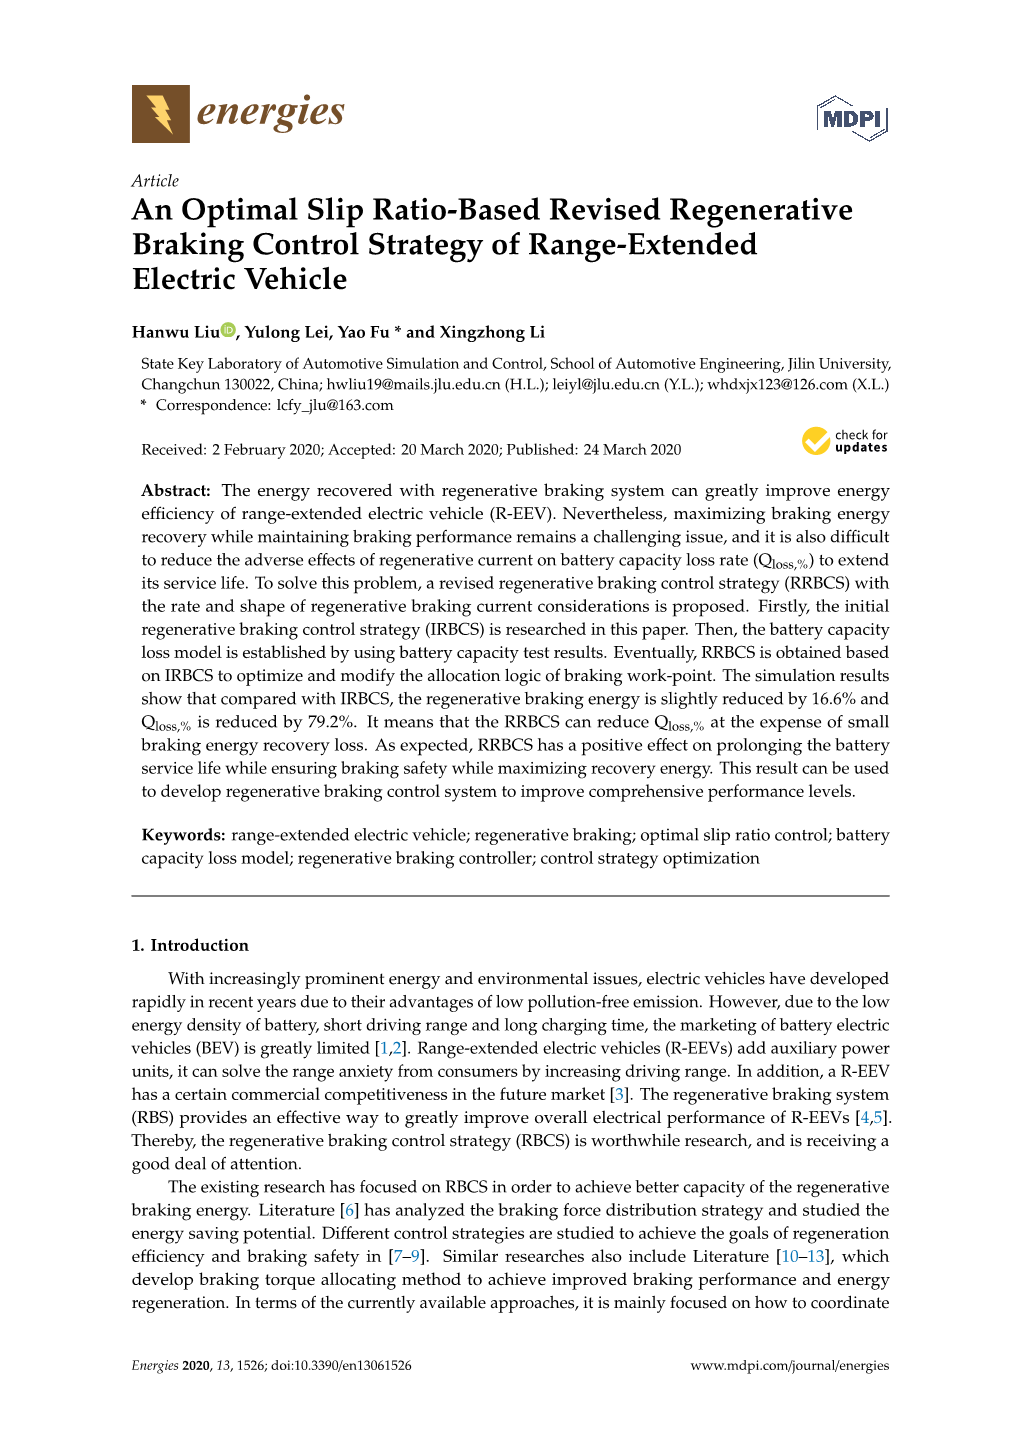 An Optimal Slip Ratio-Based Revised Regenerative Braking Control Strategy of Range-Extended Electric Vehicle